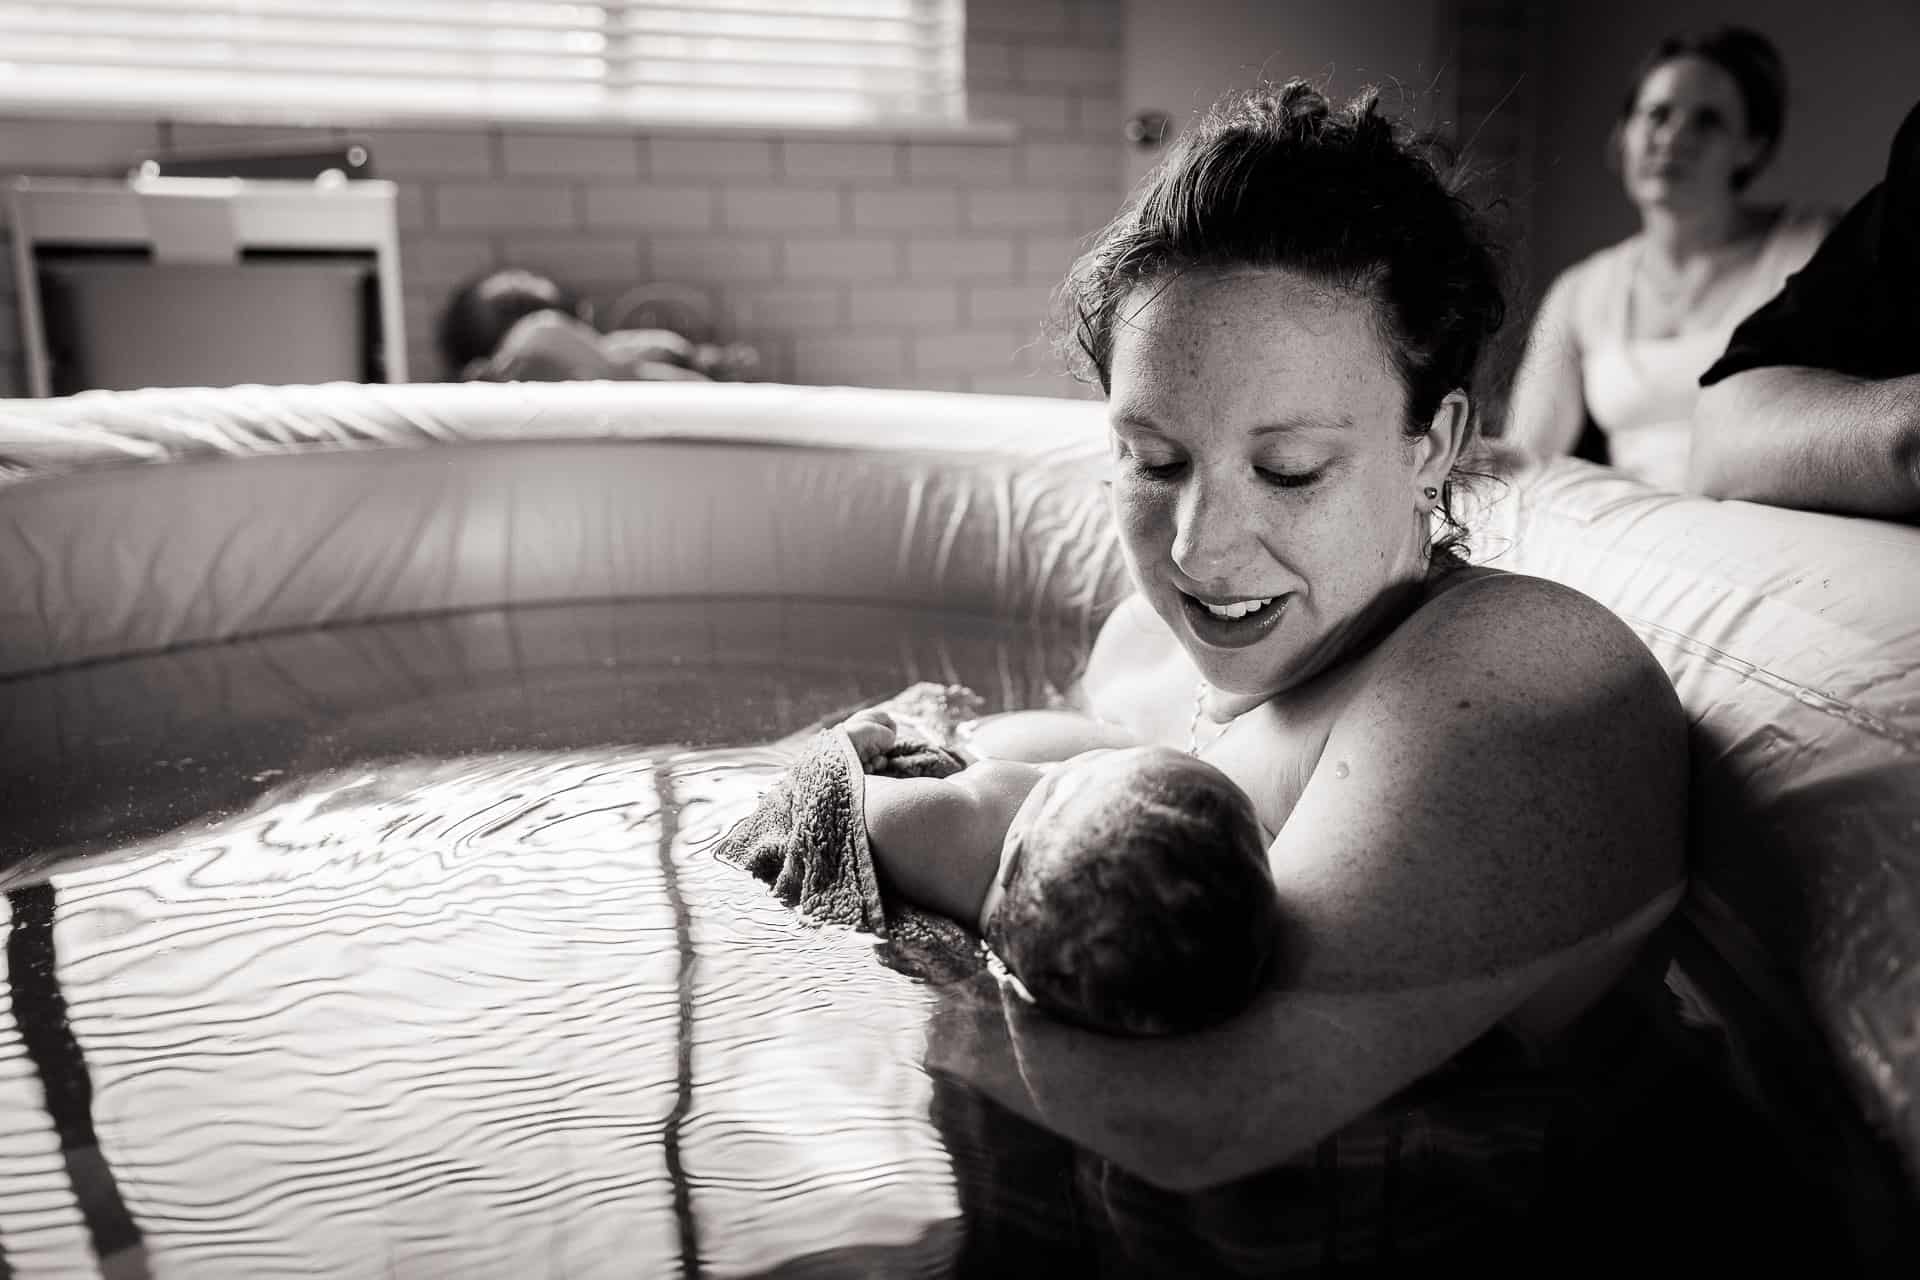 Newcastle Birth Photographer Angela Hardy captures Meagan's birt